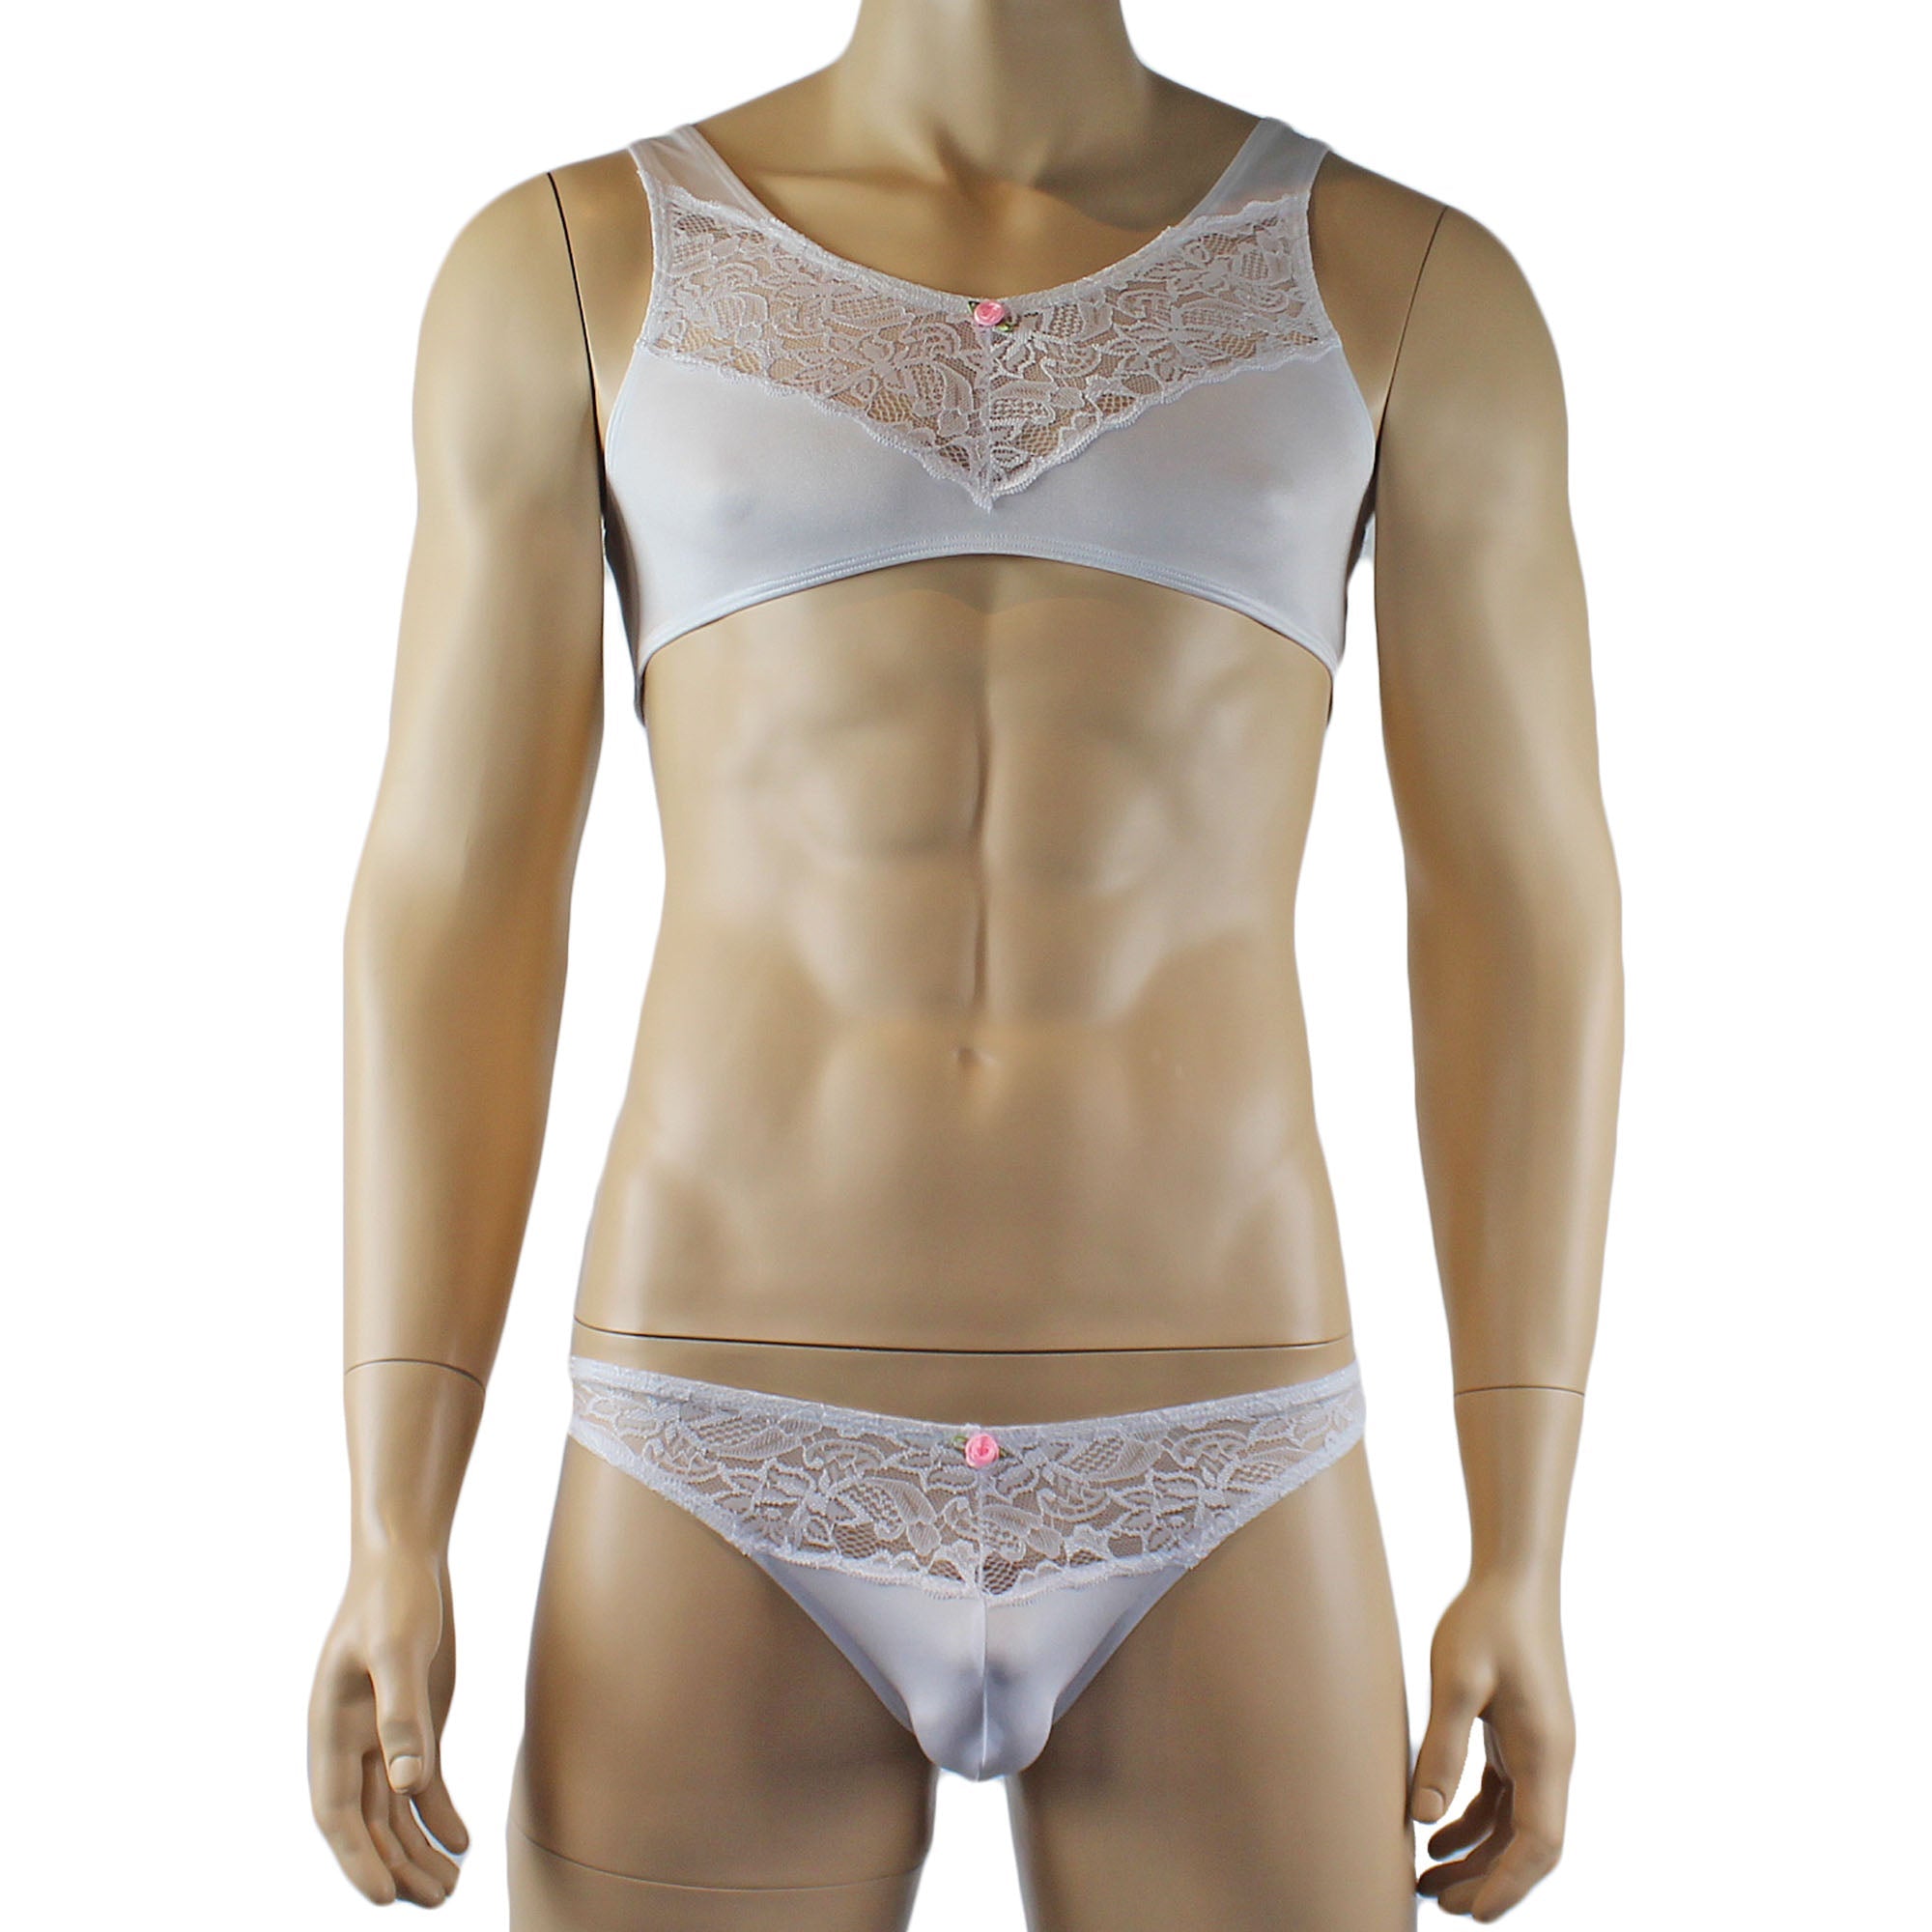 Male Penny Lingerie Bra Top with V Lace front and Capri Bikini White